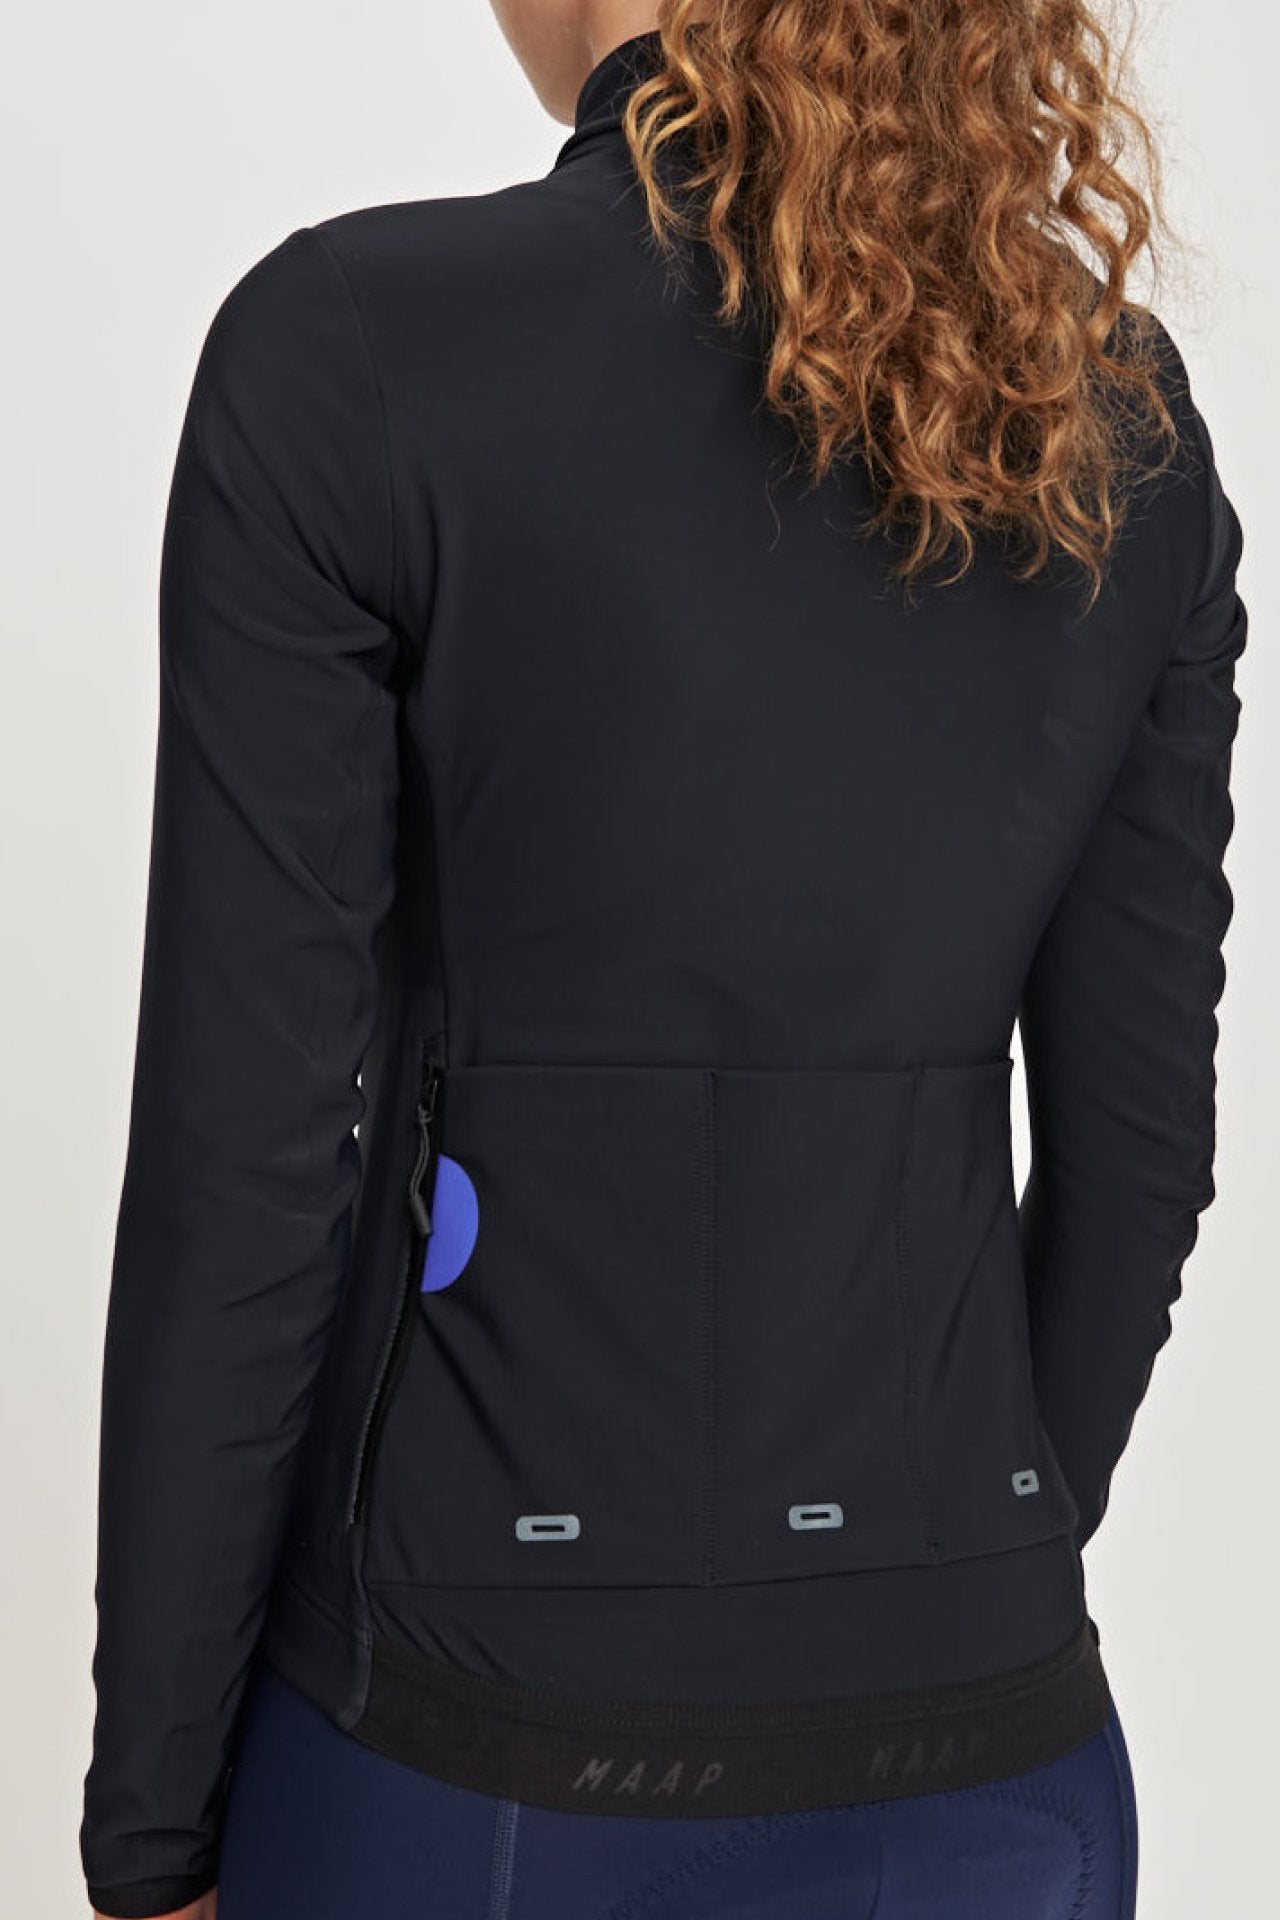 Women's Apex Winter Jacket 2.0